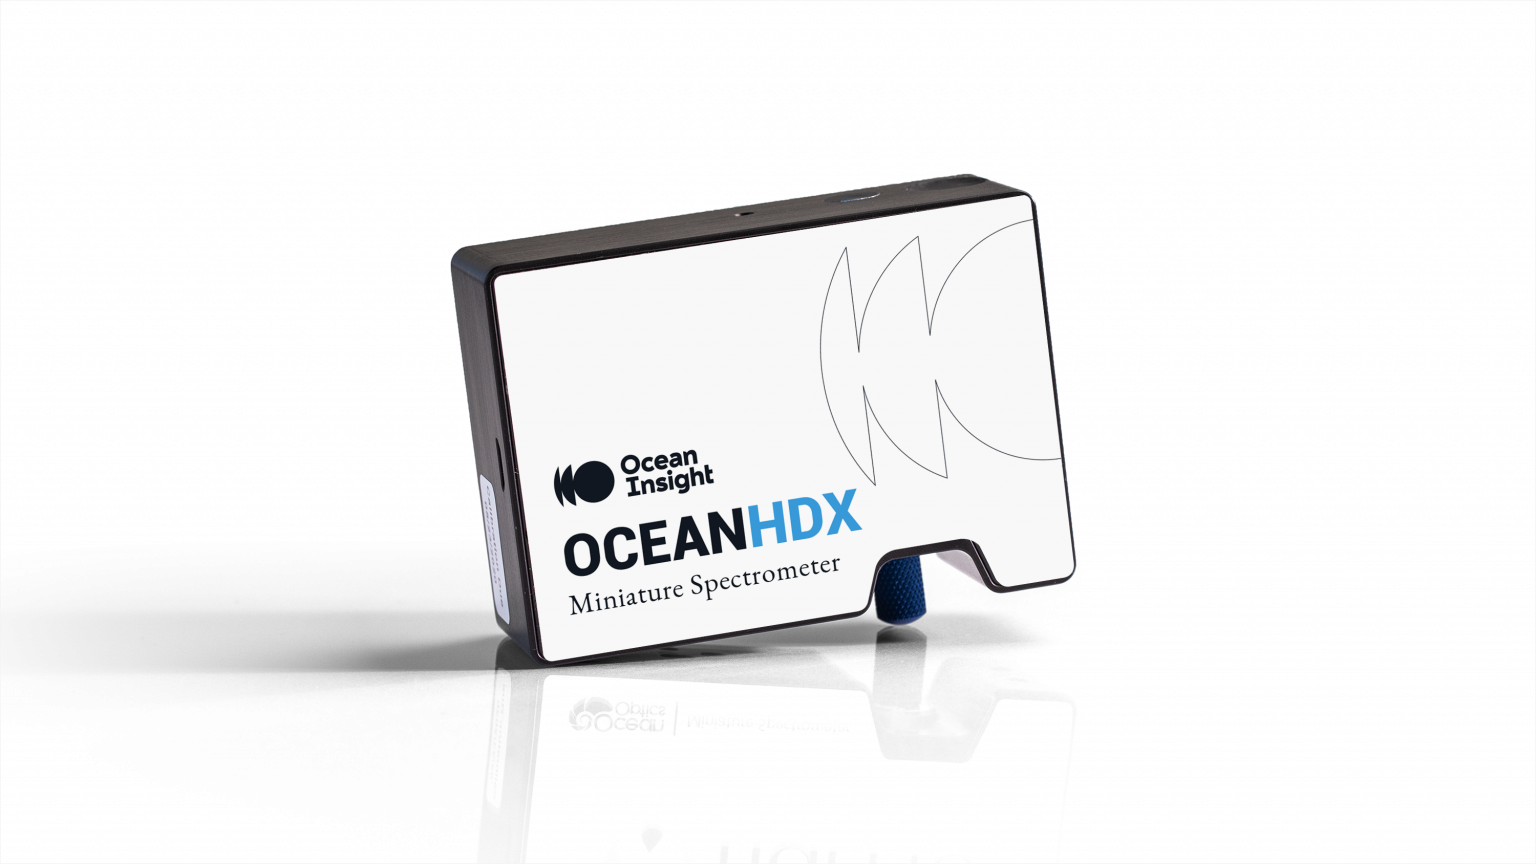 Ocean HDX Miniature Spectrometer